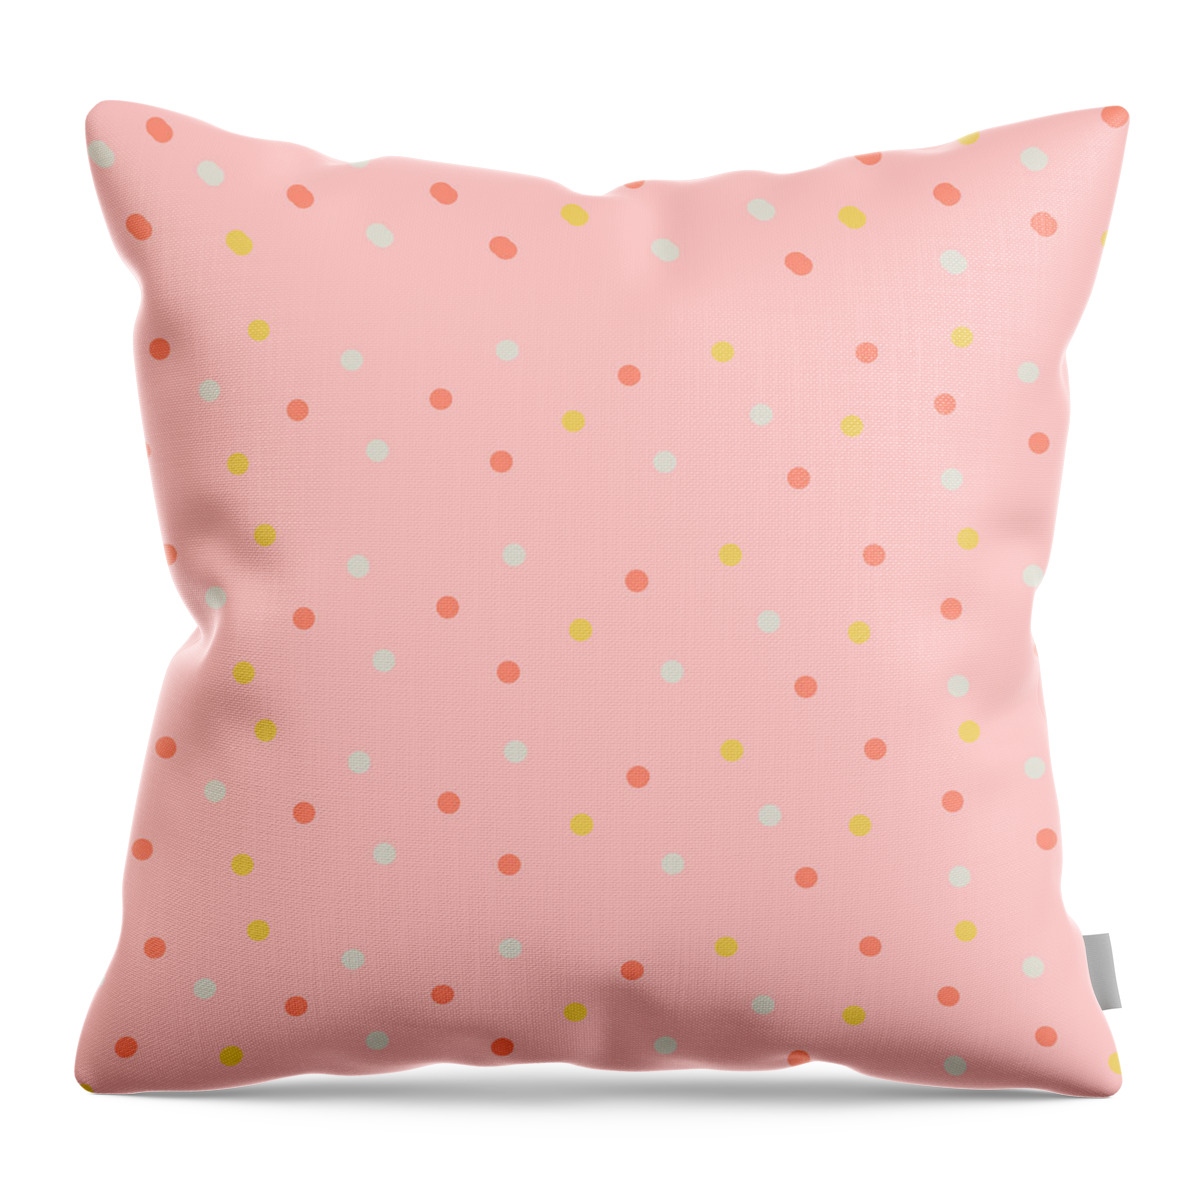 Rose Throw Pillow featuring the digital art Soft Rose Polka Dot Art by Caterina Christakos